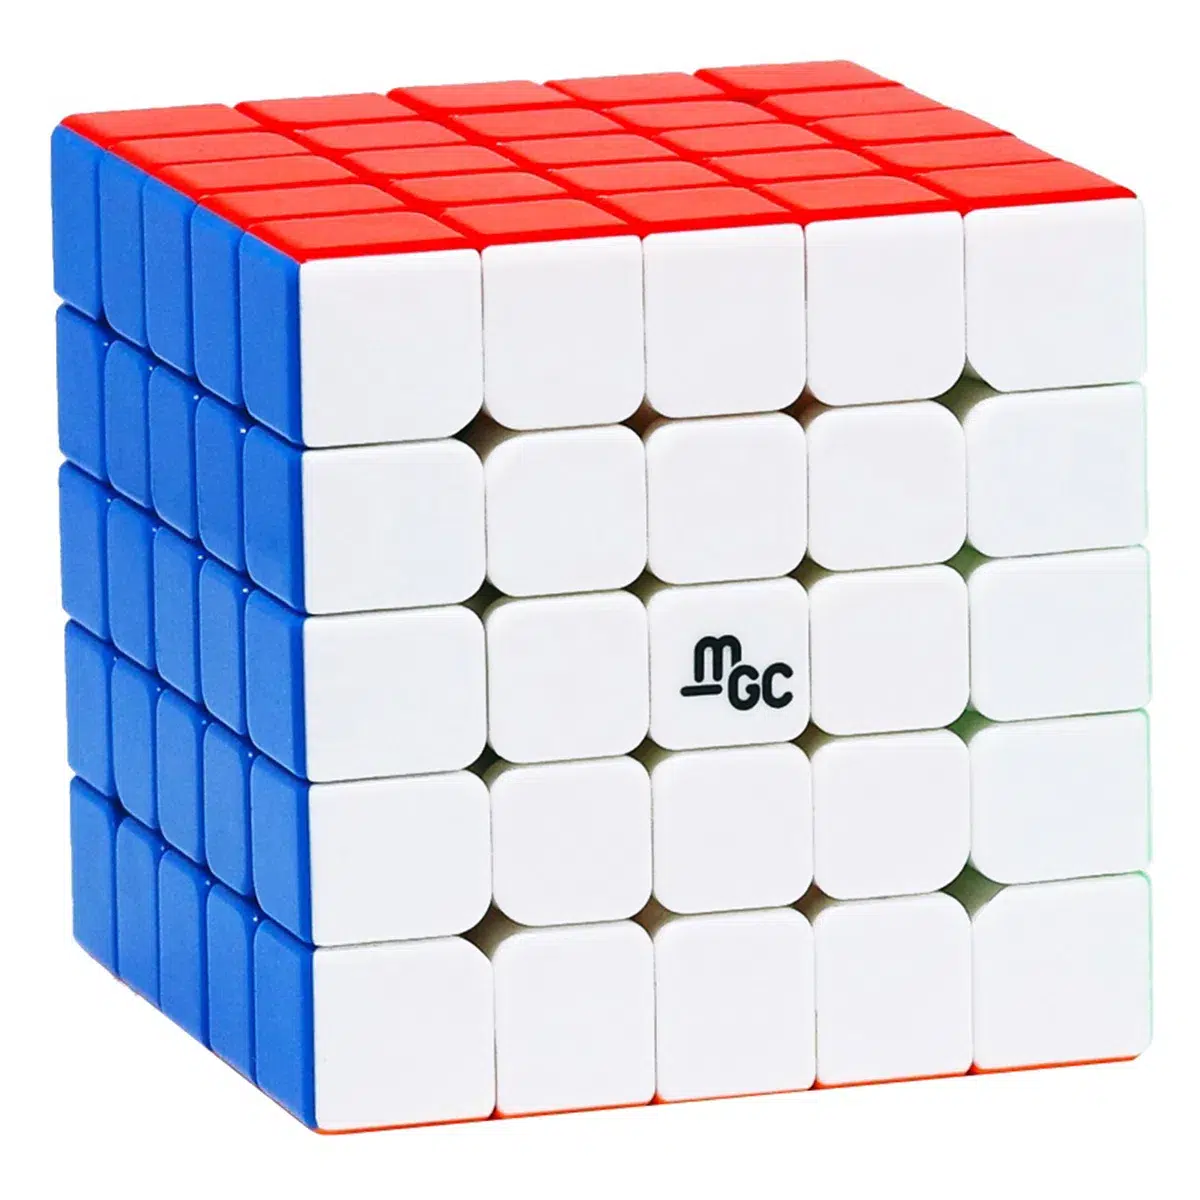 5x5 Speed Cube YJ MGC 5x5 M - Stickerlos